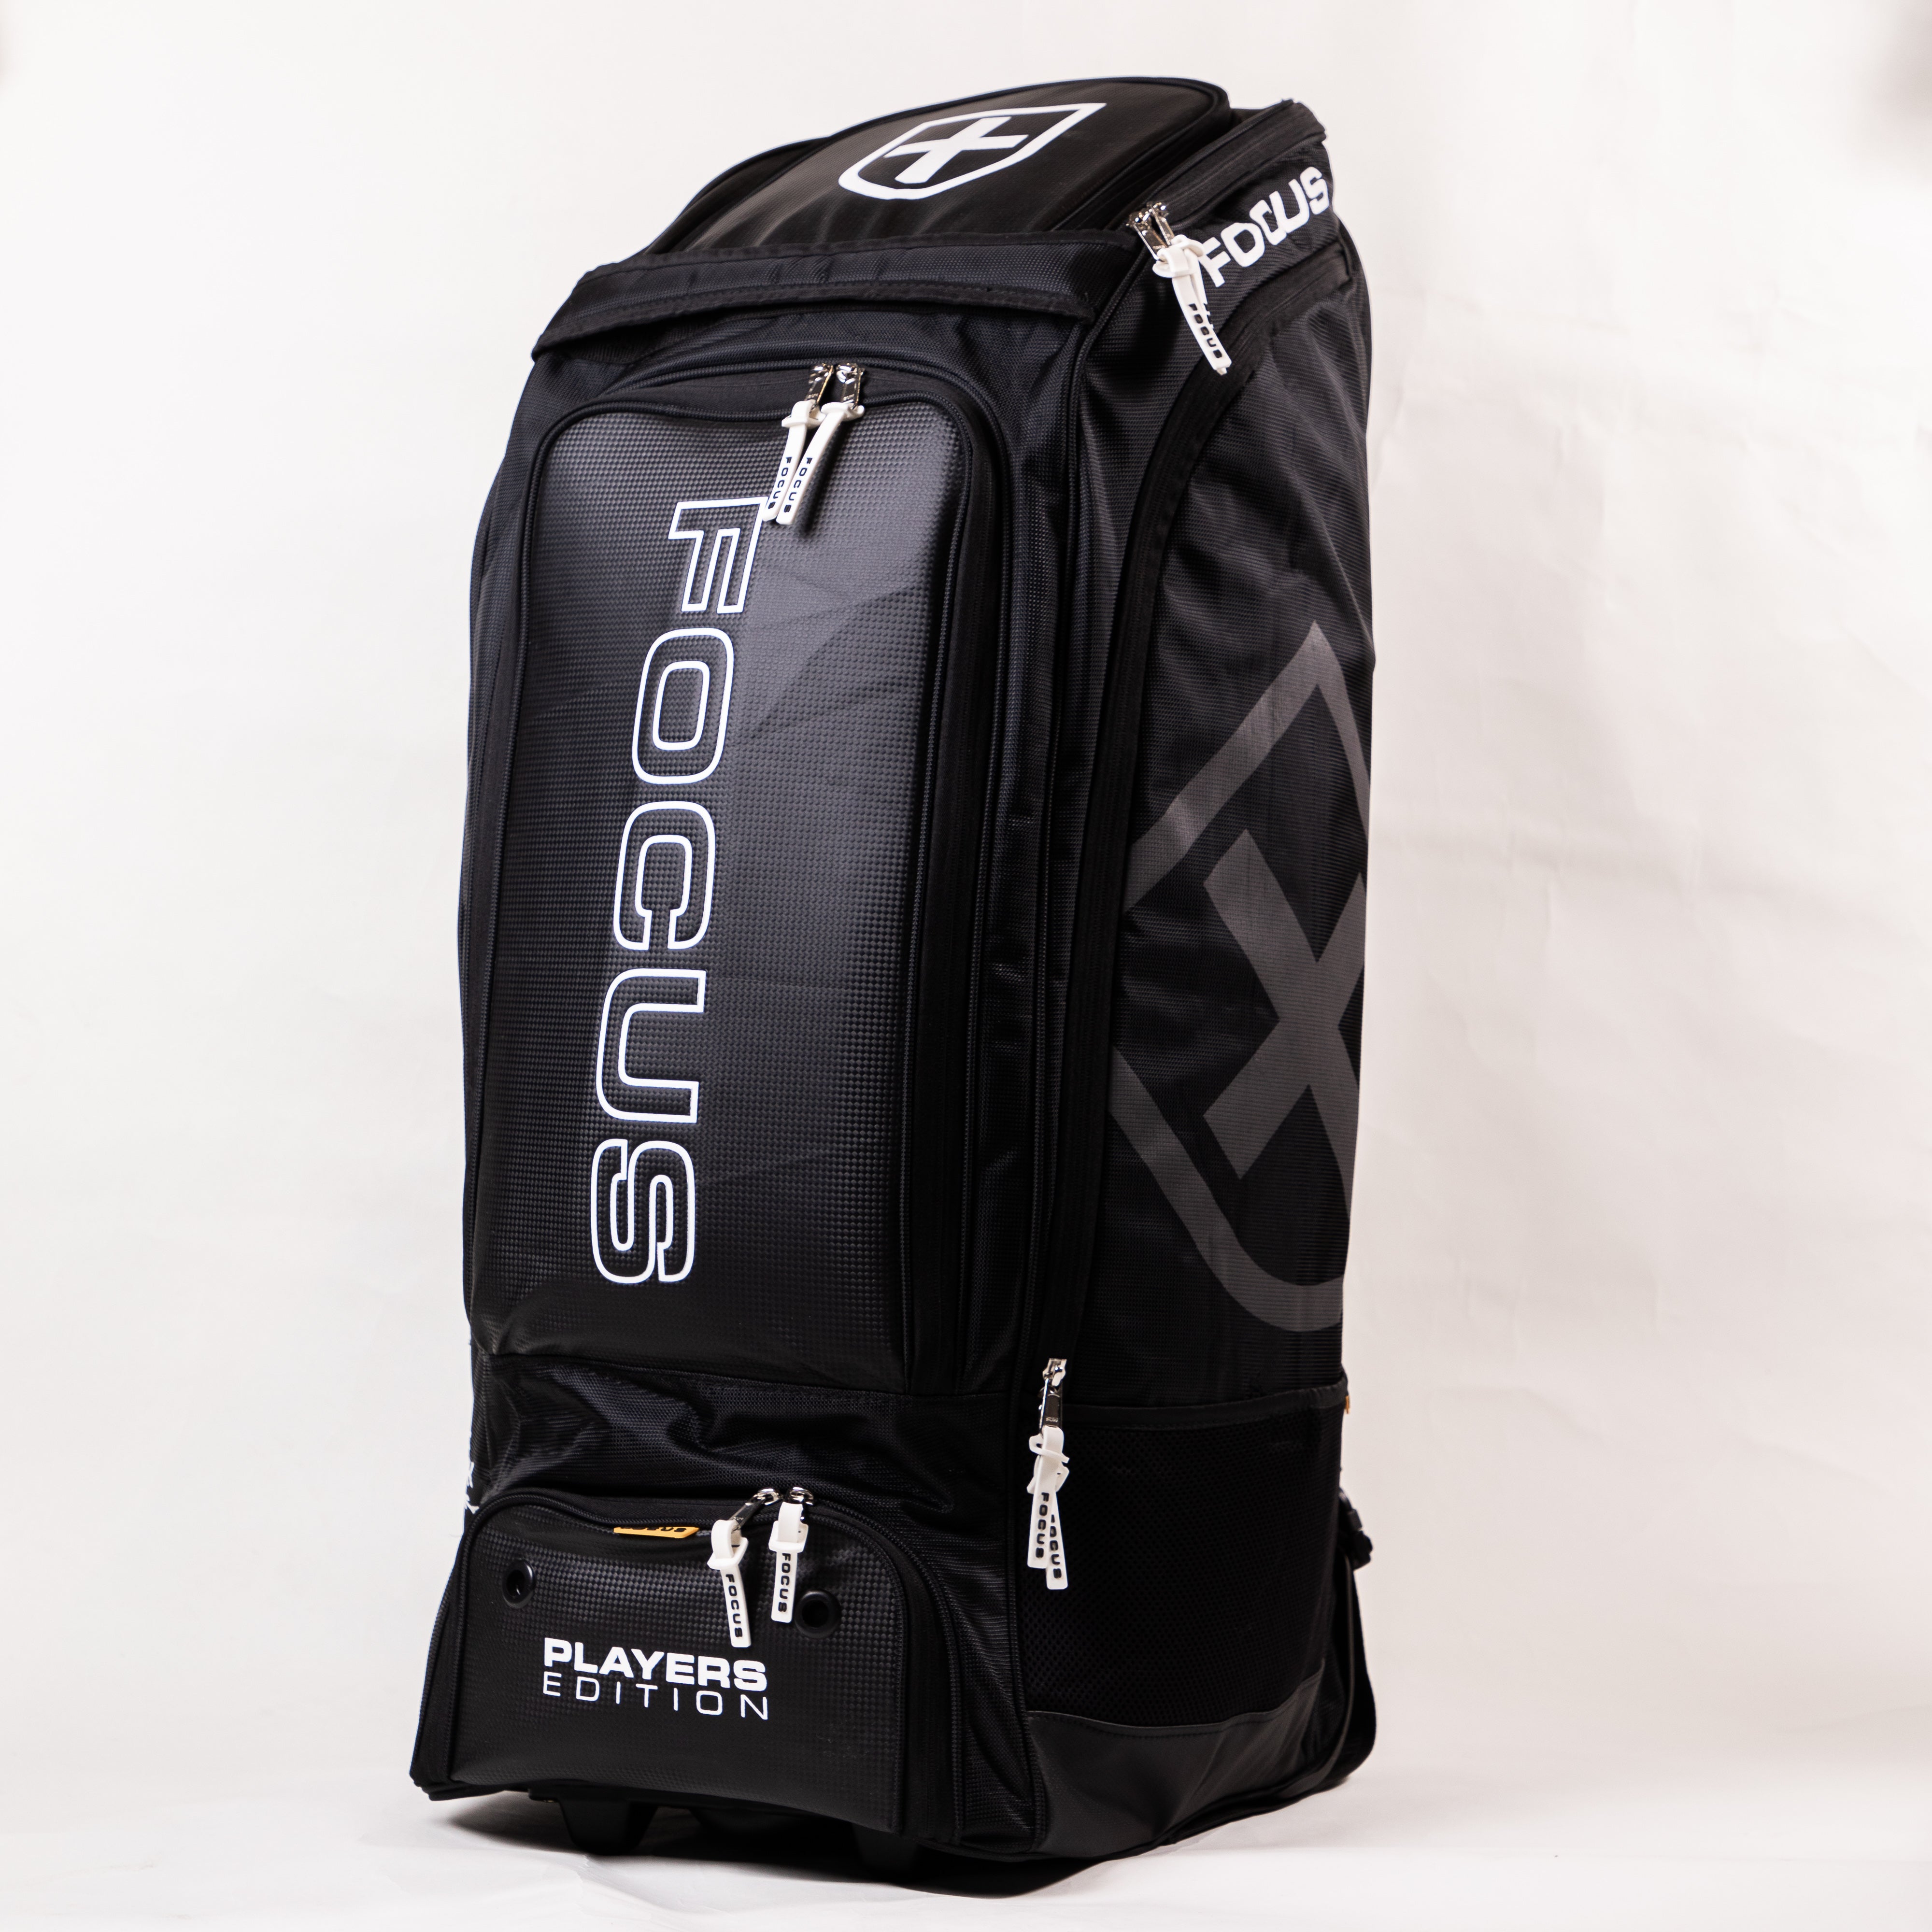 Shop Cricket Kit Bags Online - Cricket Store Online